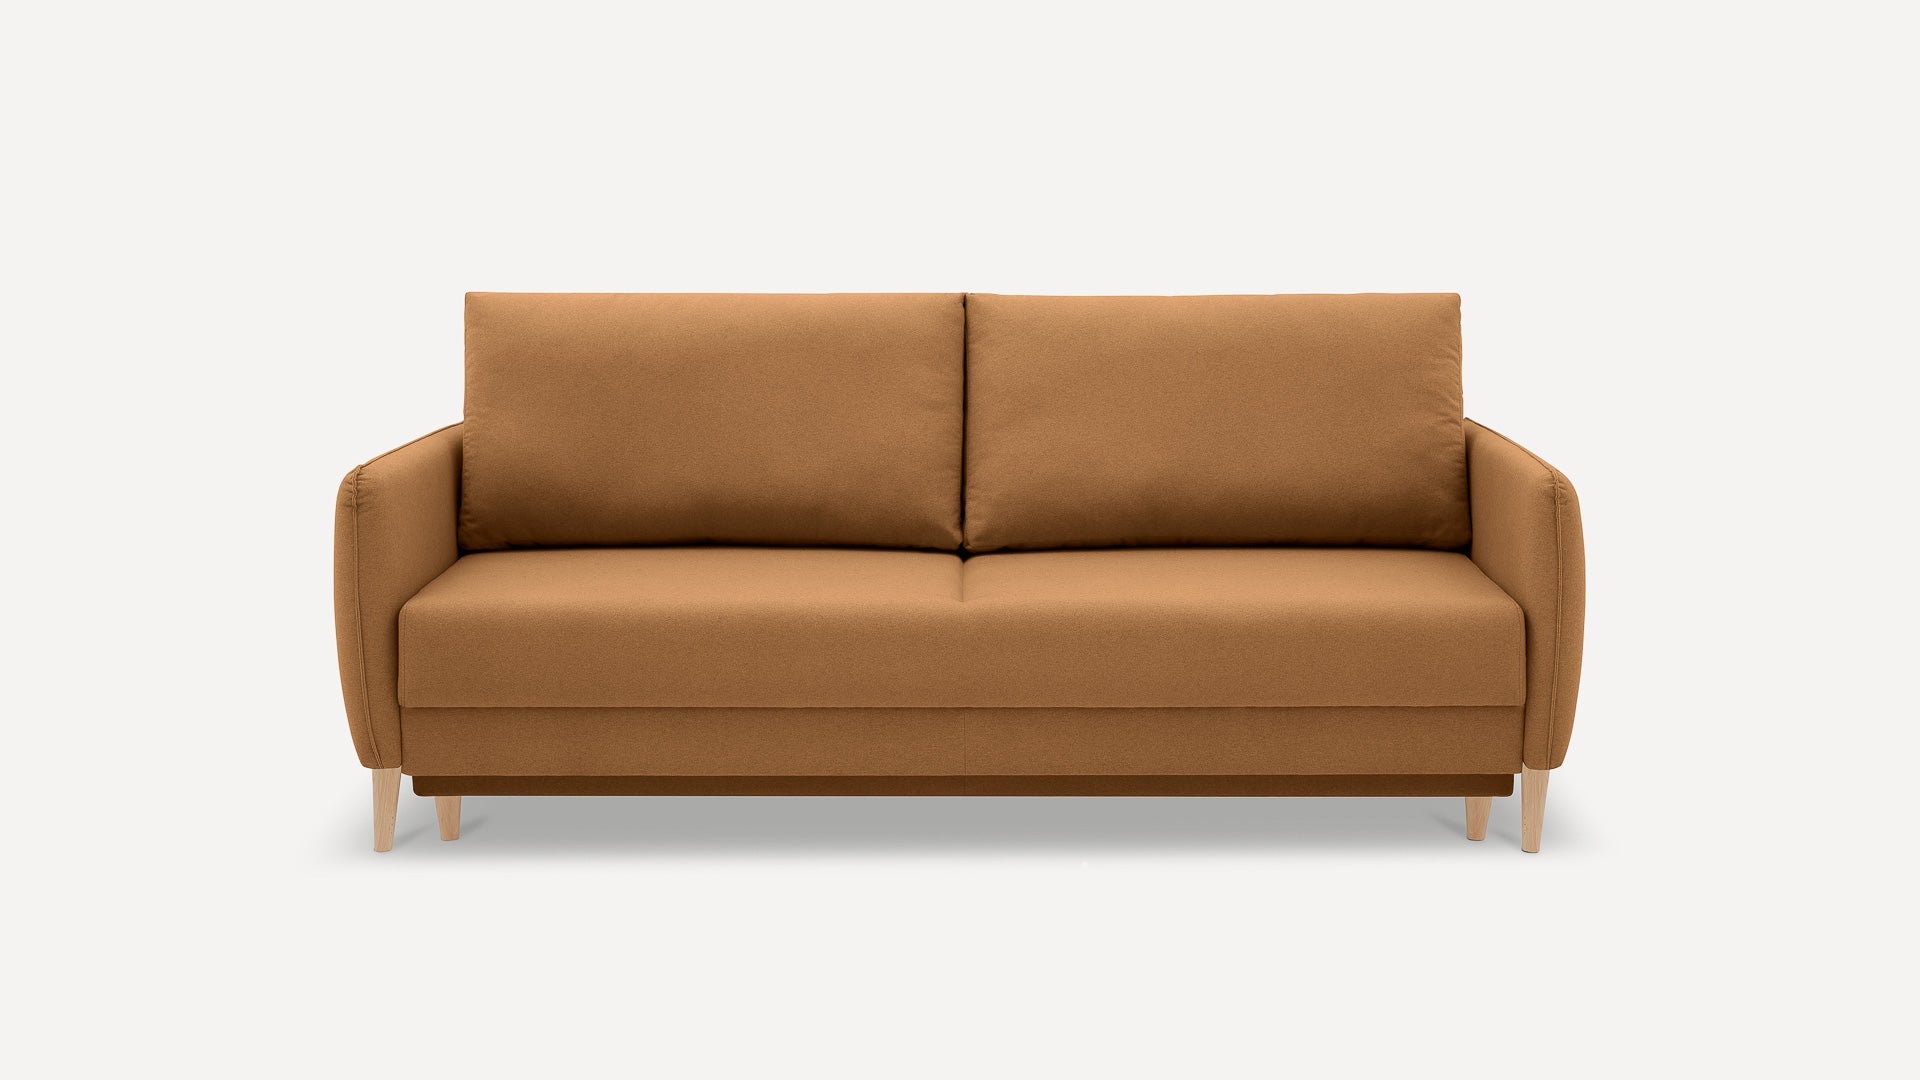 Sofa Benet DL Flauszowa - Benet